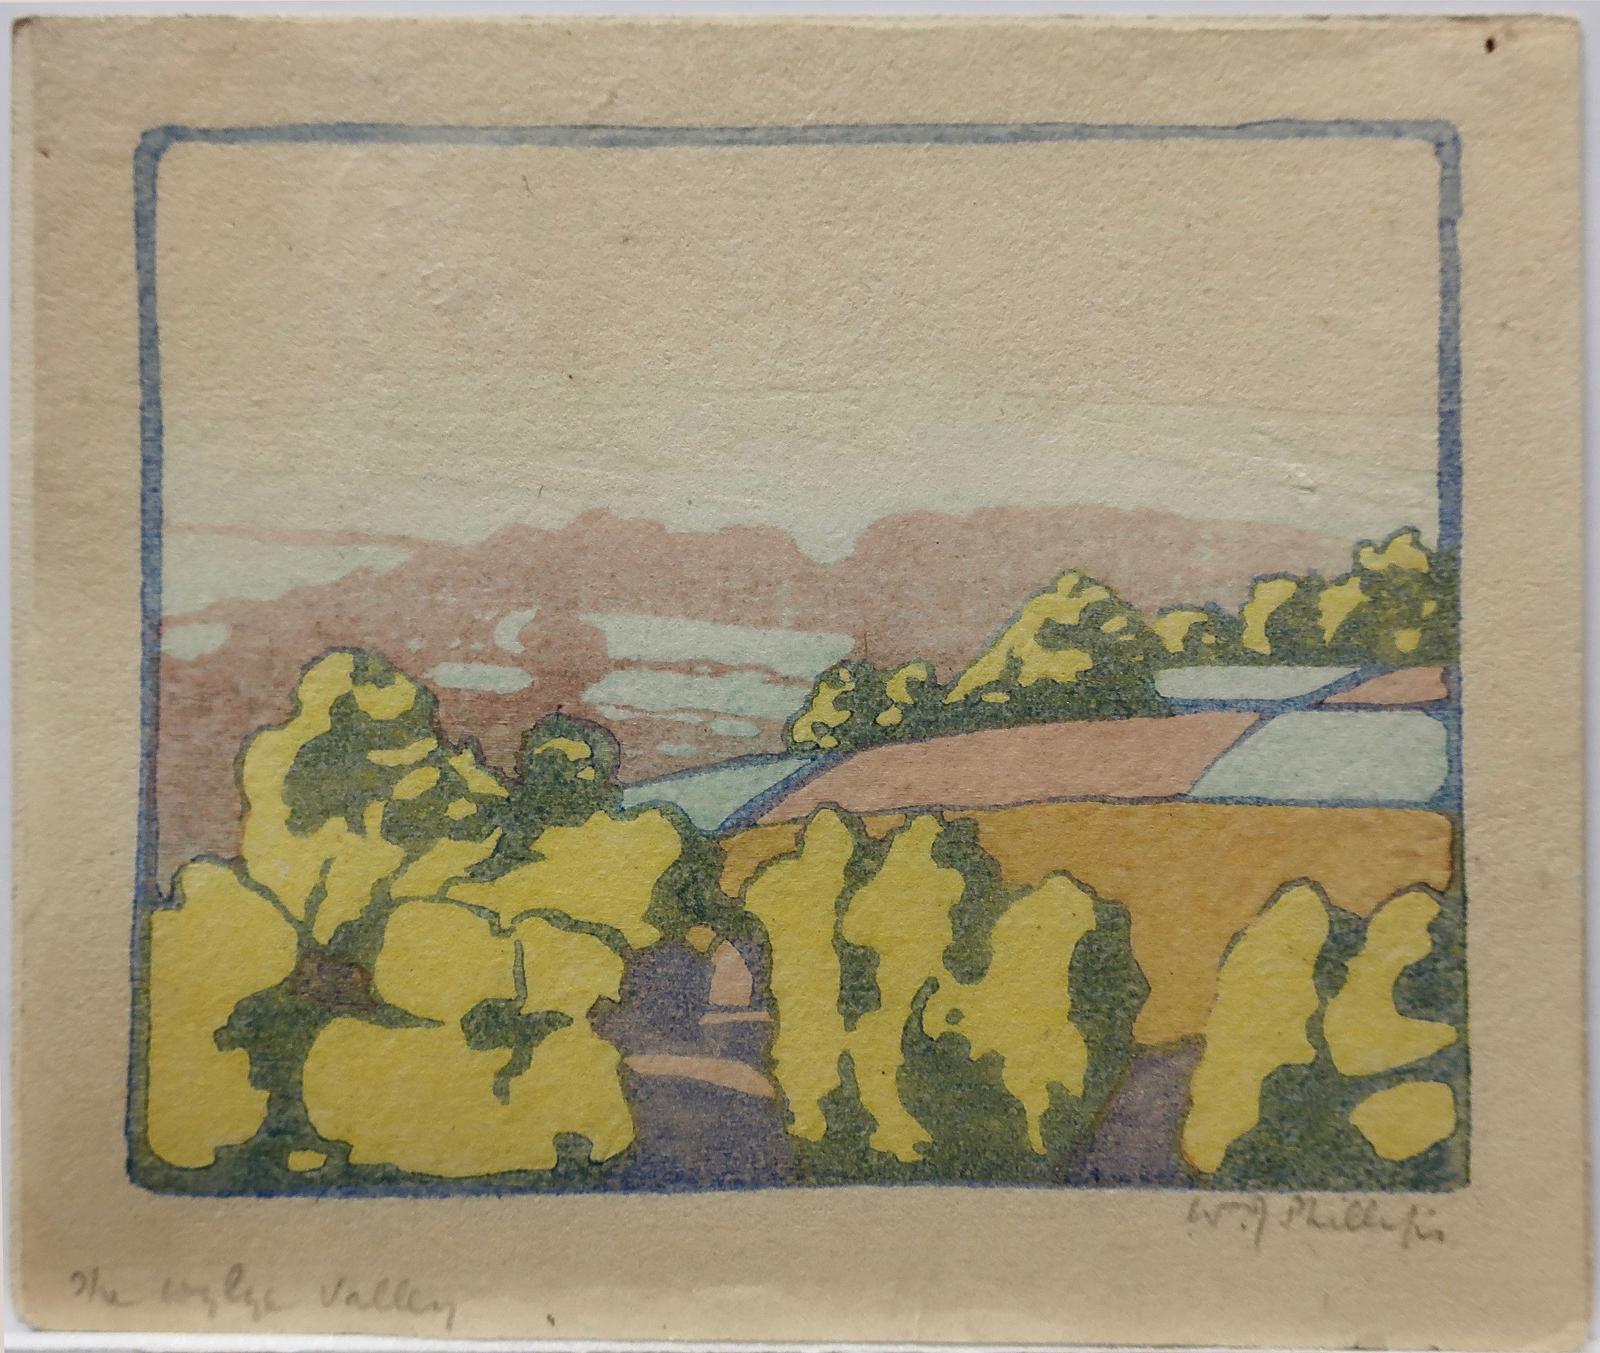 Walter Joseph (W.J.) Phillips (1884-1963) - The Wylye Valley, 1925